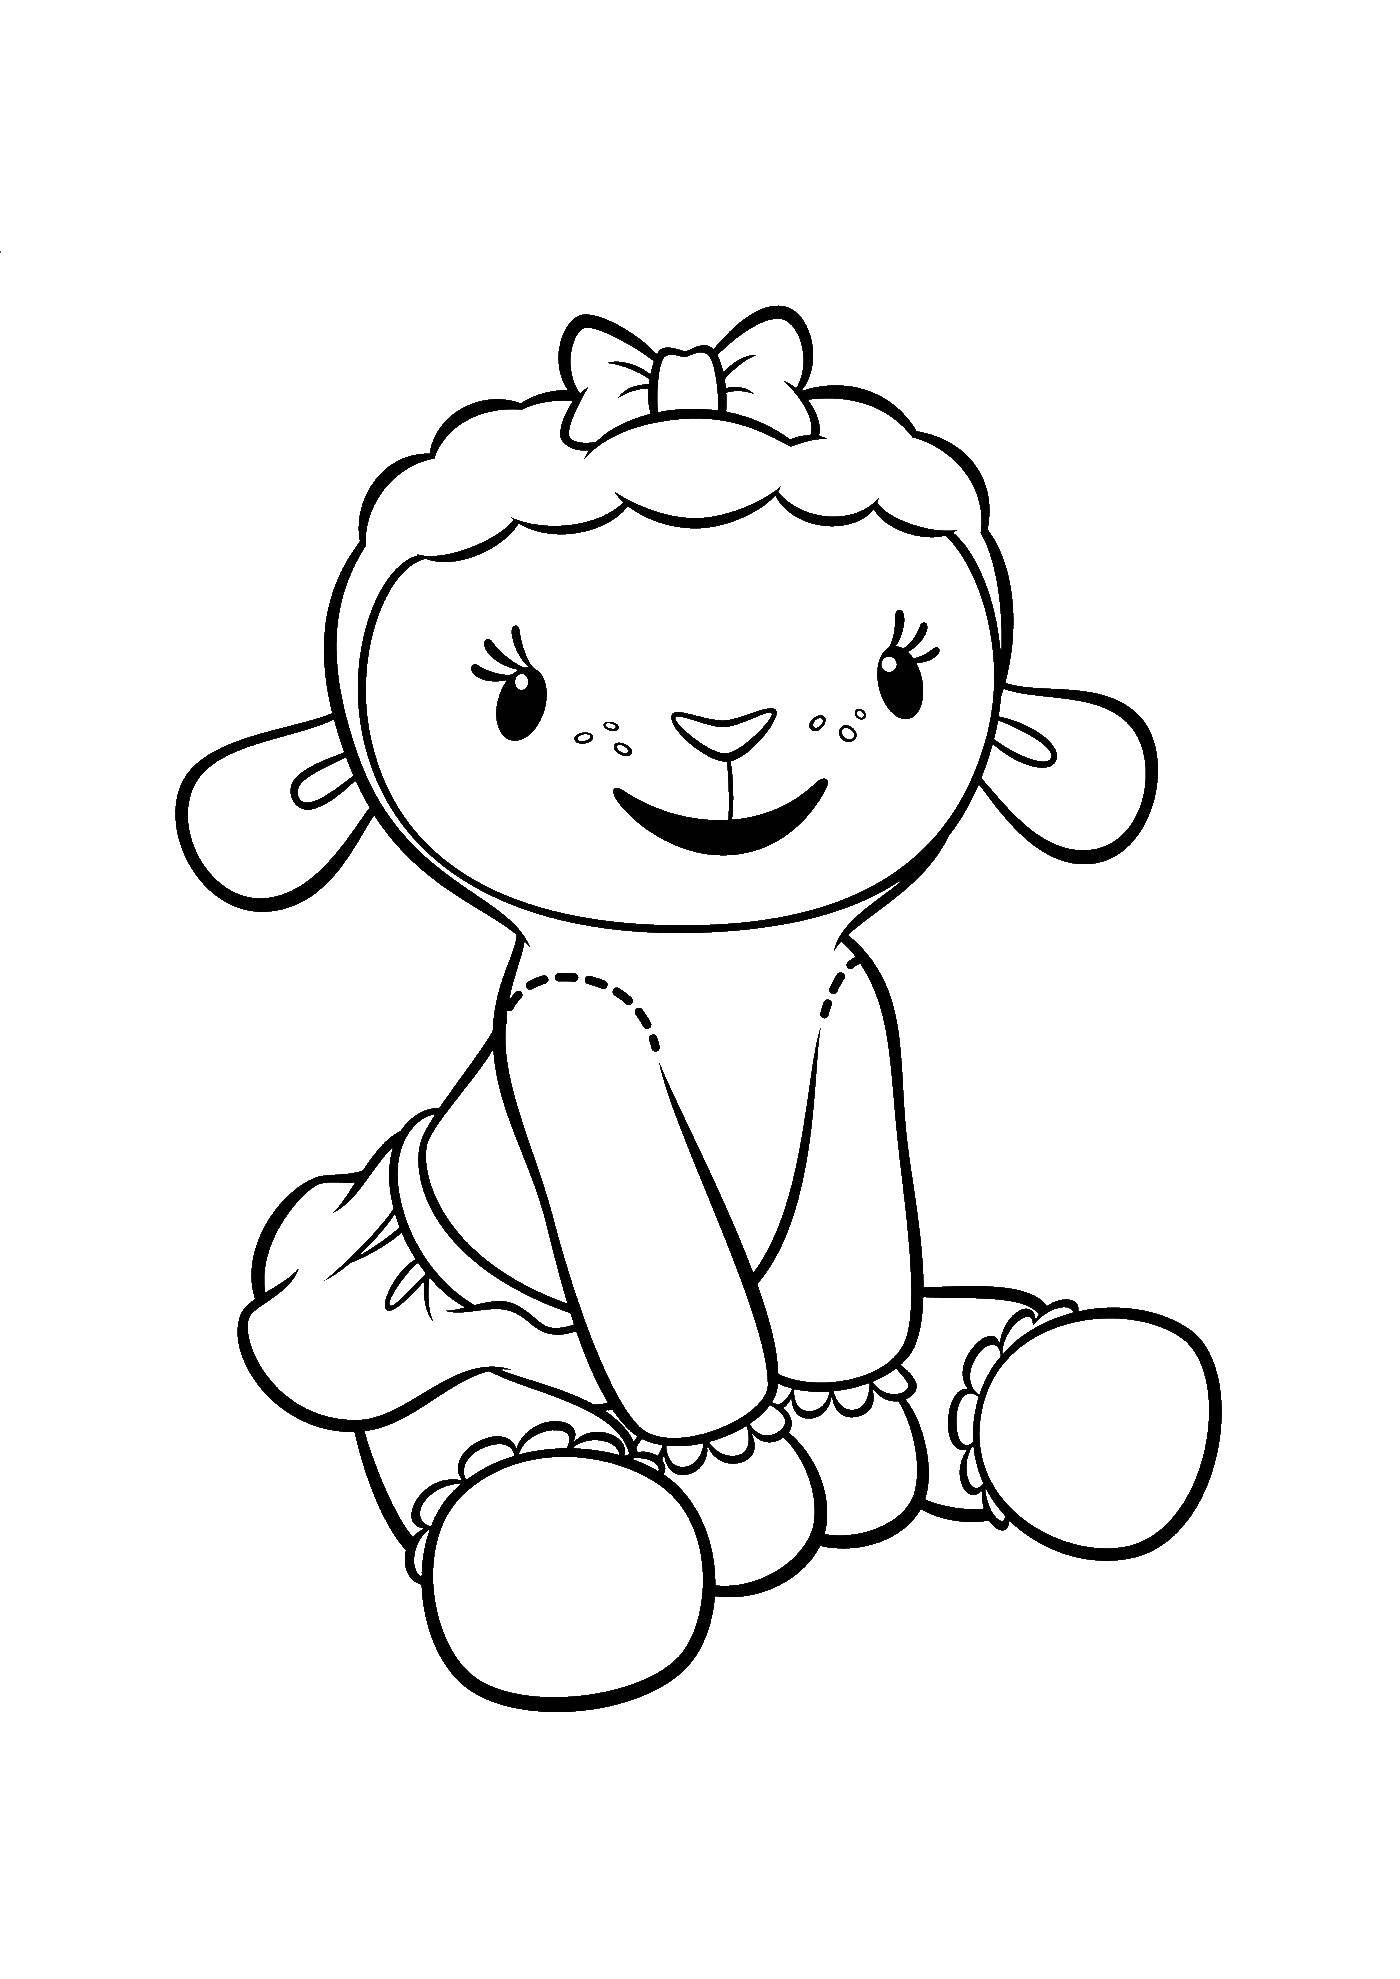 Название: Раскраска Лэмми плюшевая овечка. Категория: раскраски. Теги: Лэмми, доктор плюшева.